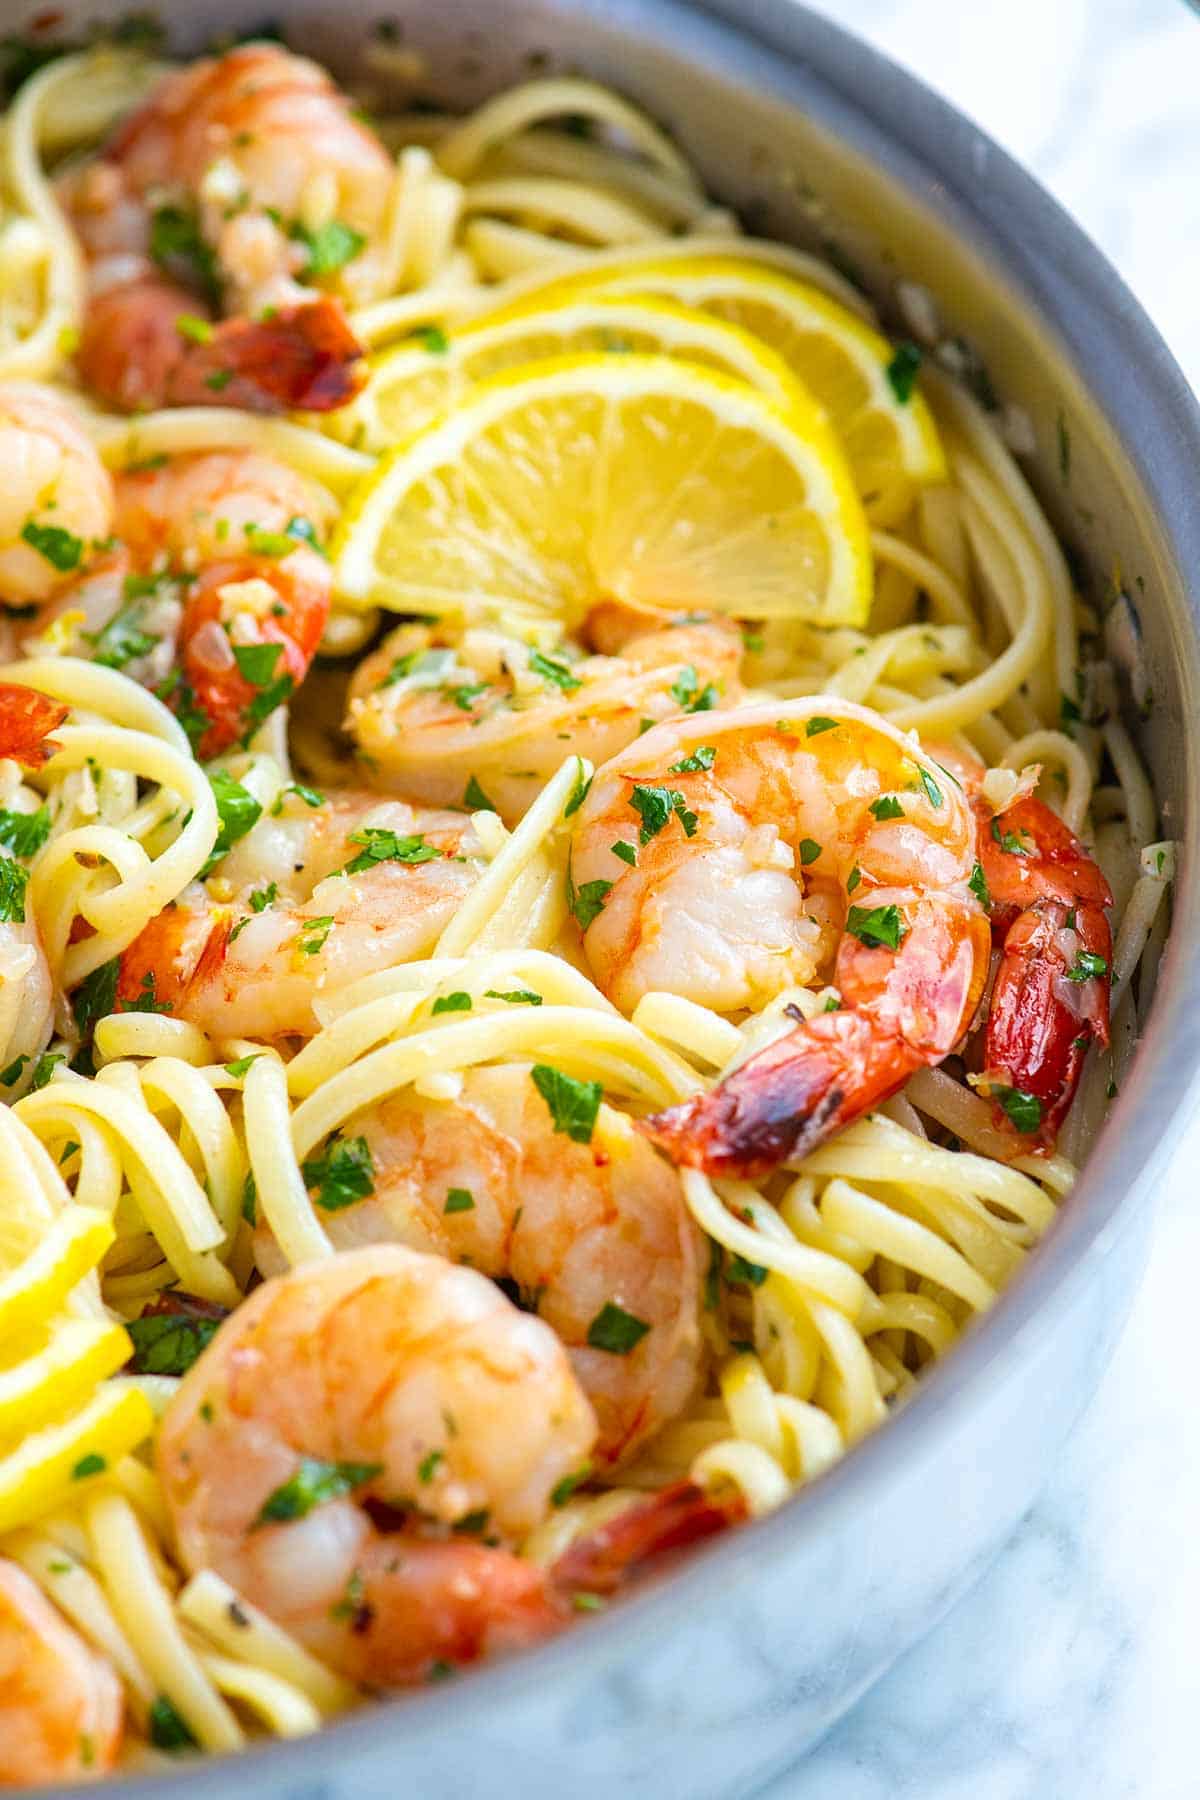 How to Make Shrimp Scampi with Pasta